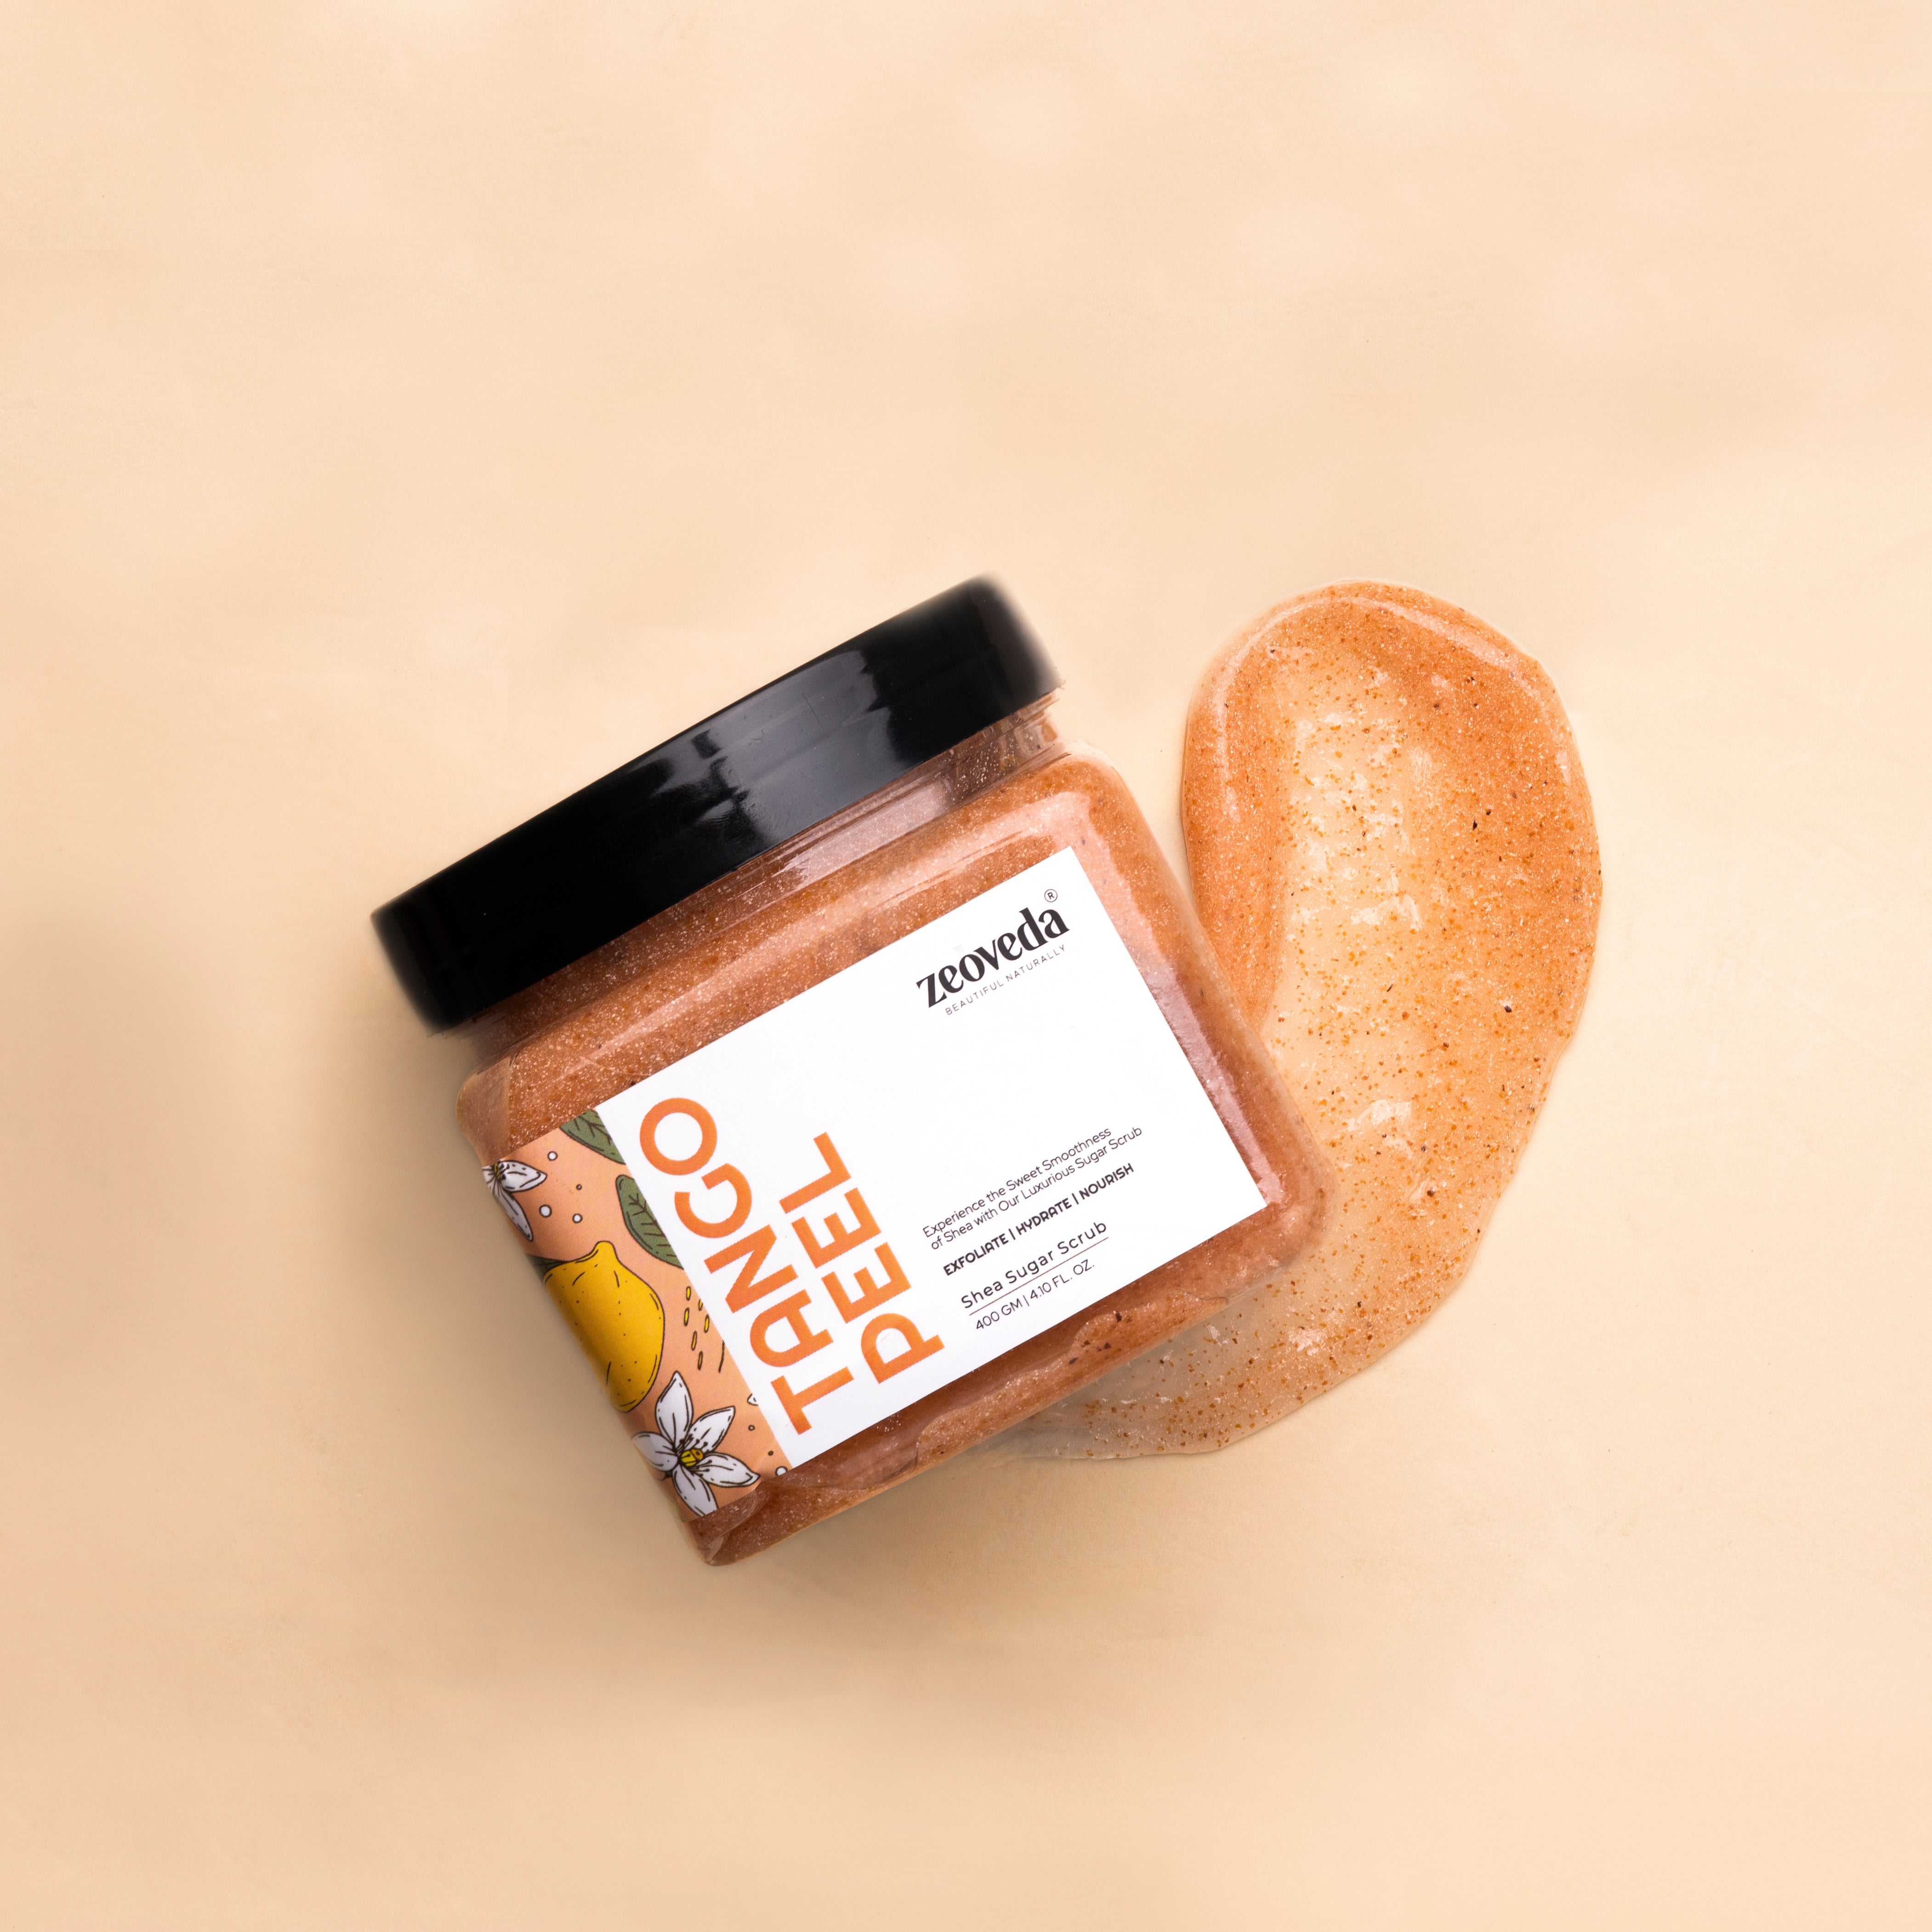 Tango Peel Shea Sugar Scrub for Radiant and Glowing Skin | Gentle Body Exfoliator (400gm)